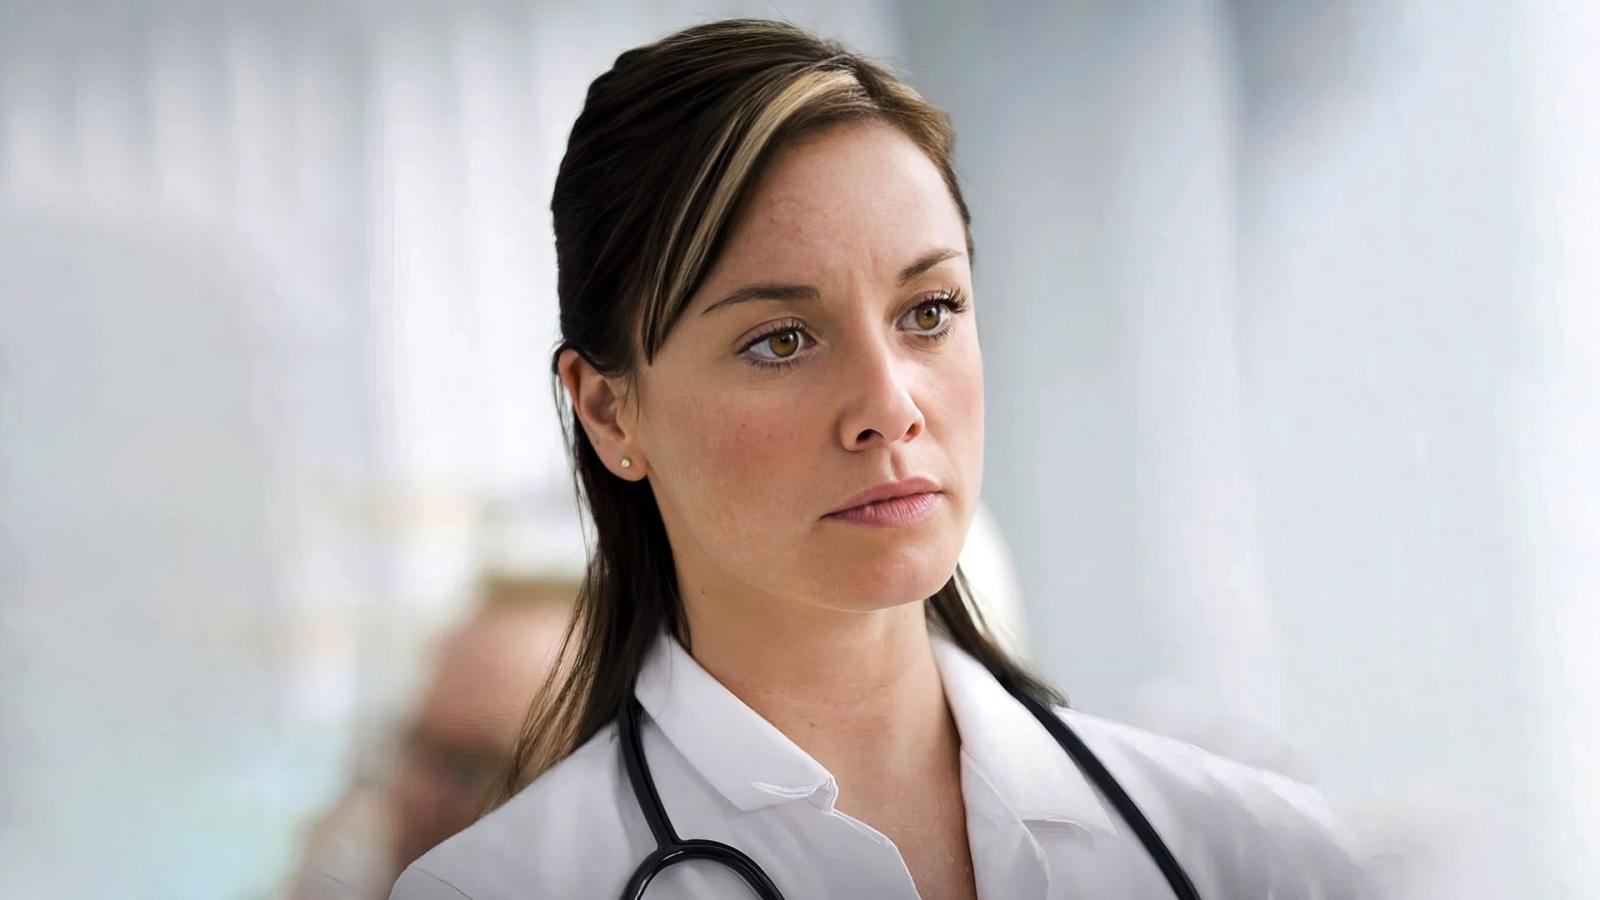 10 Under-the-Radar Medical Dramas That Aren't Grey's Anatomy - image 5